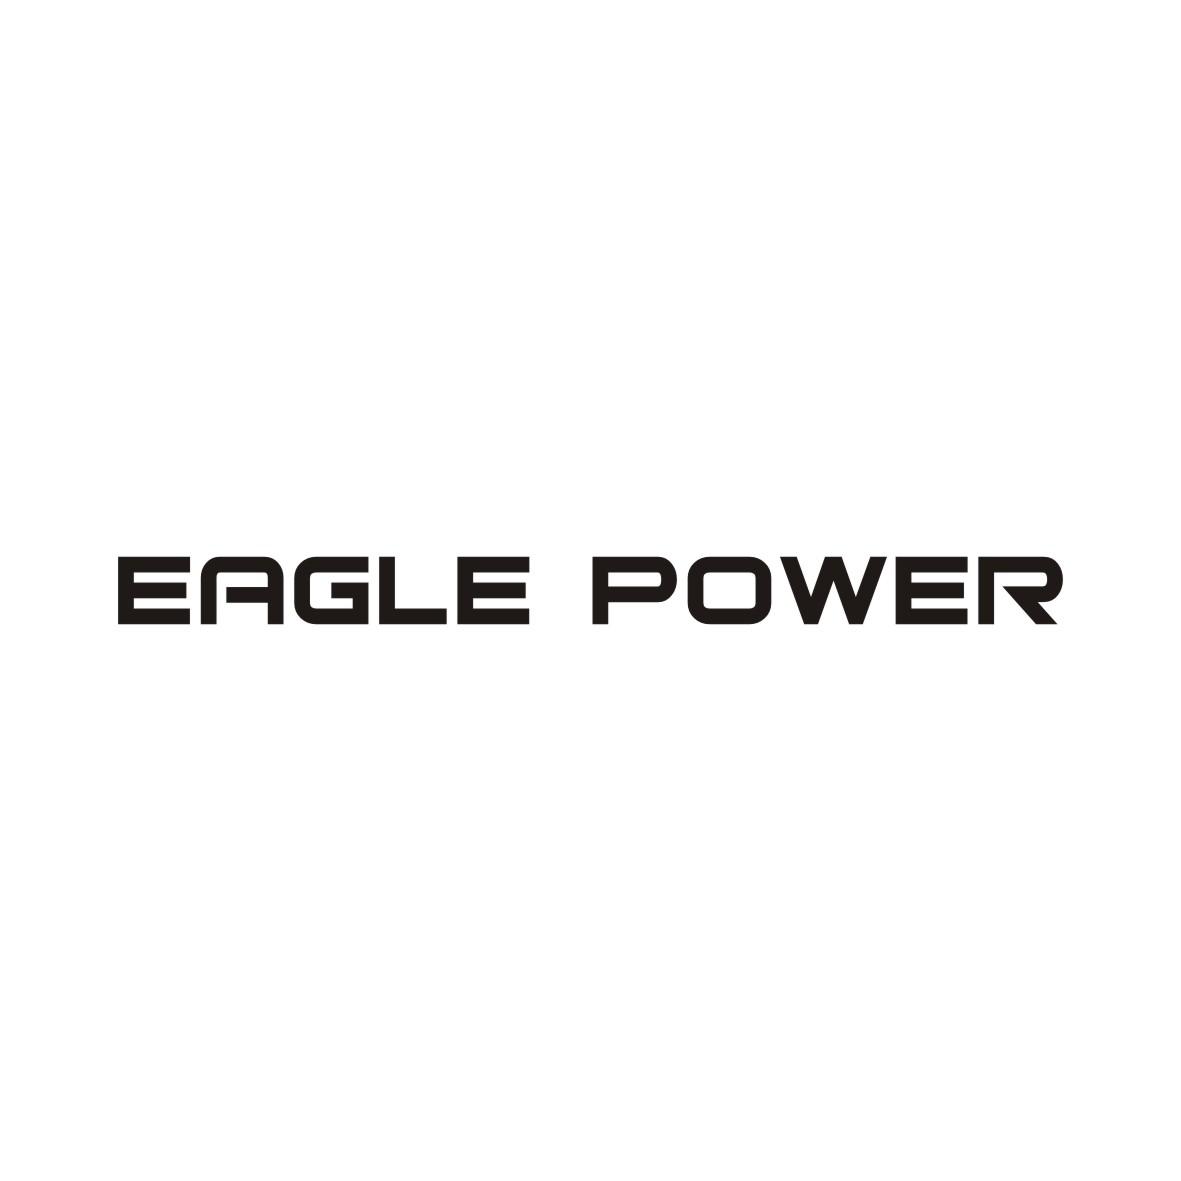 EAGLE POWER